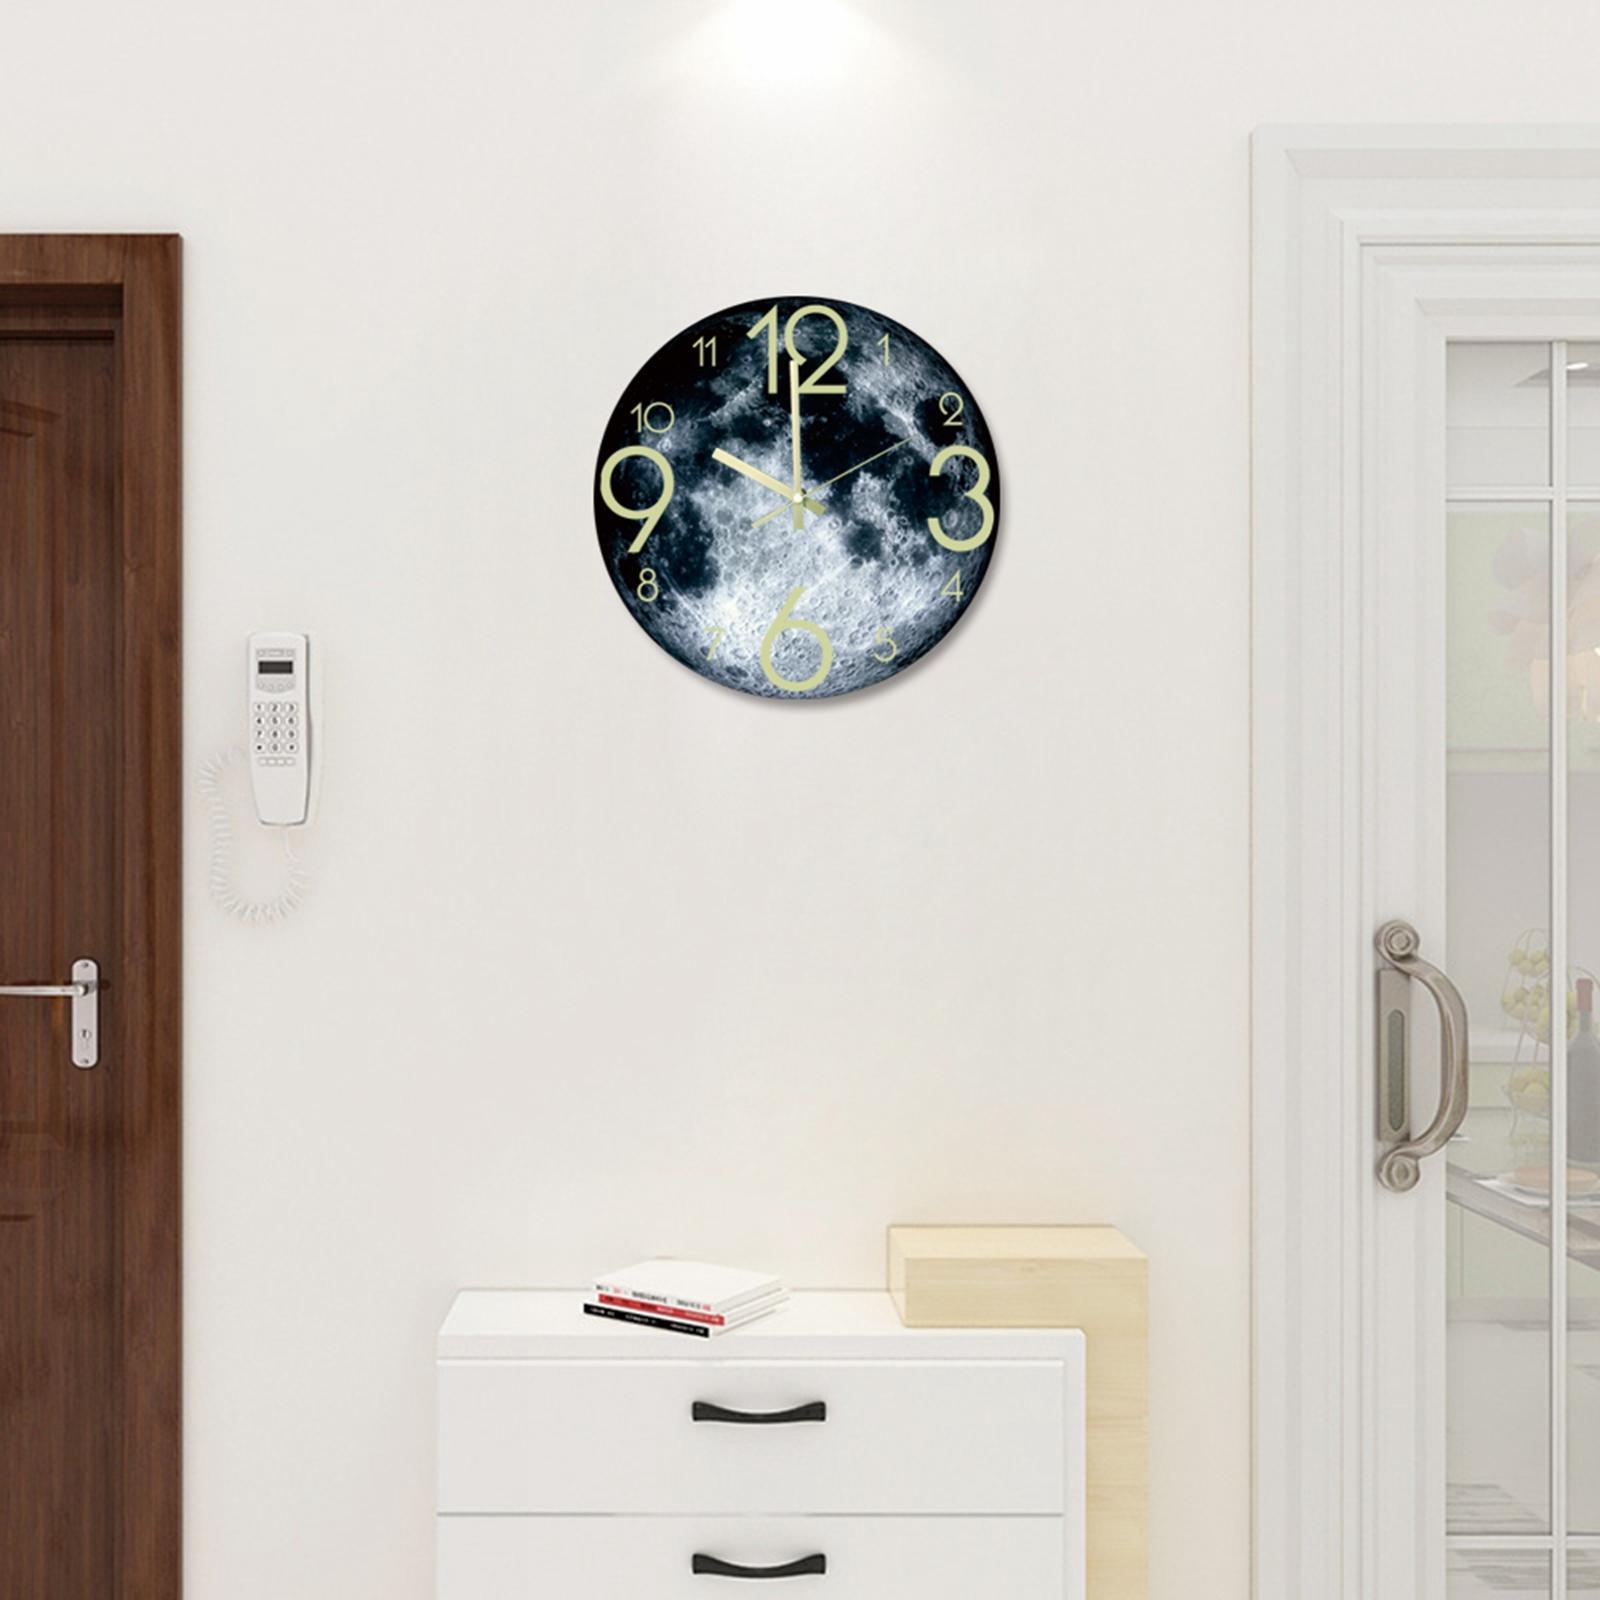 Home Office Decor Watch Decorative Moon